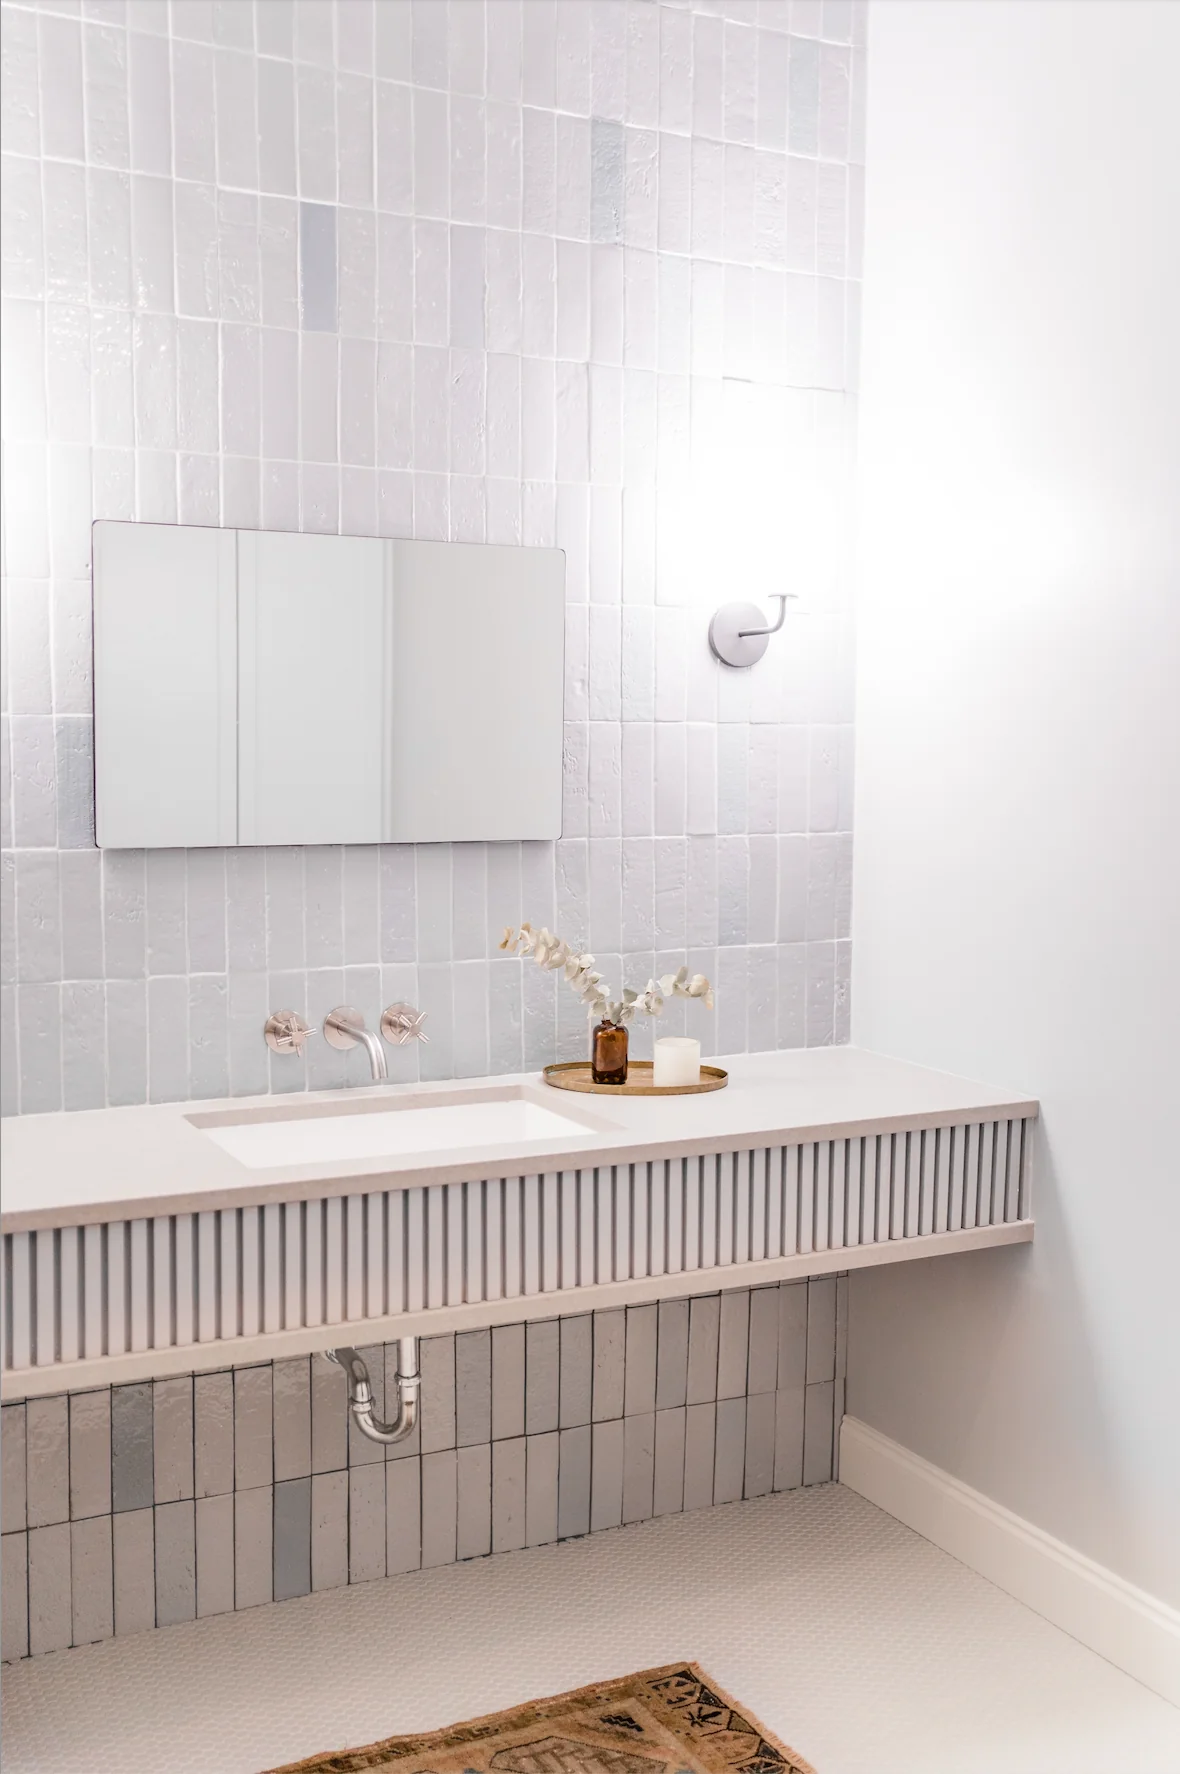 Modern bathroom design with glazed gray tiles